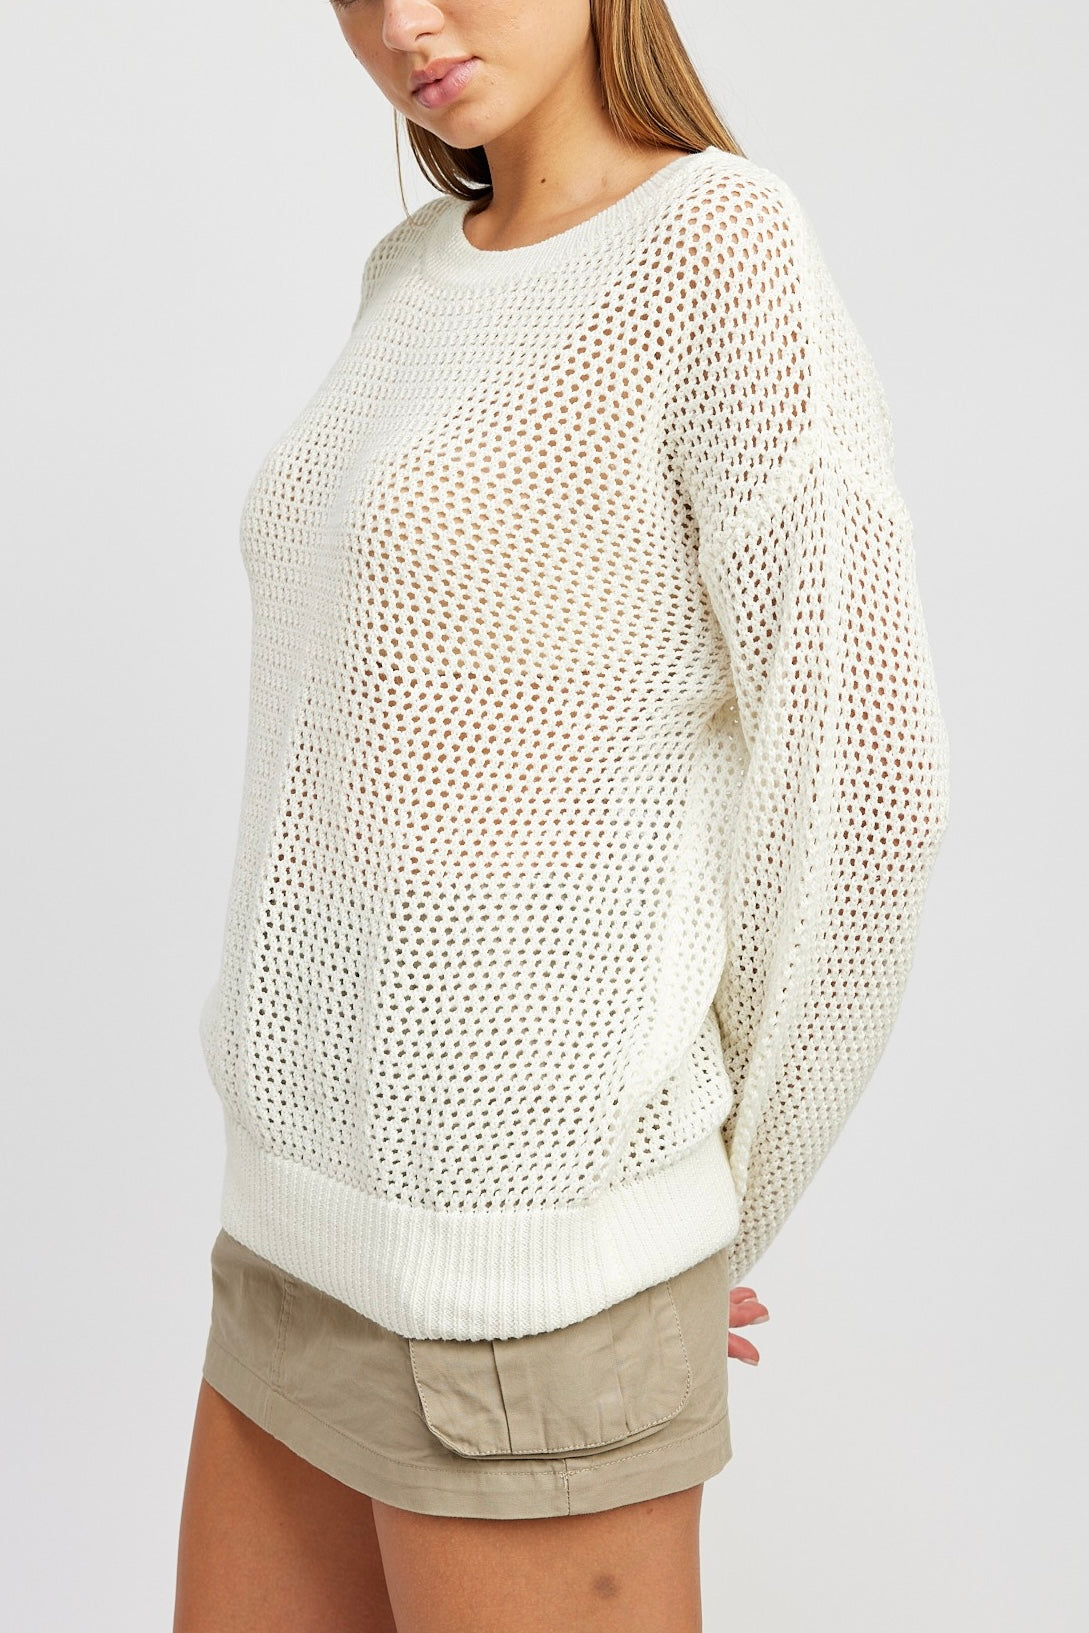 Cora Crochet Long Sleeve Top